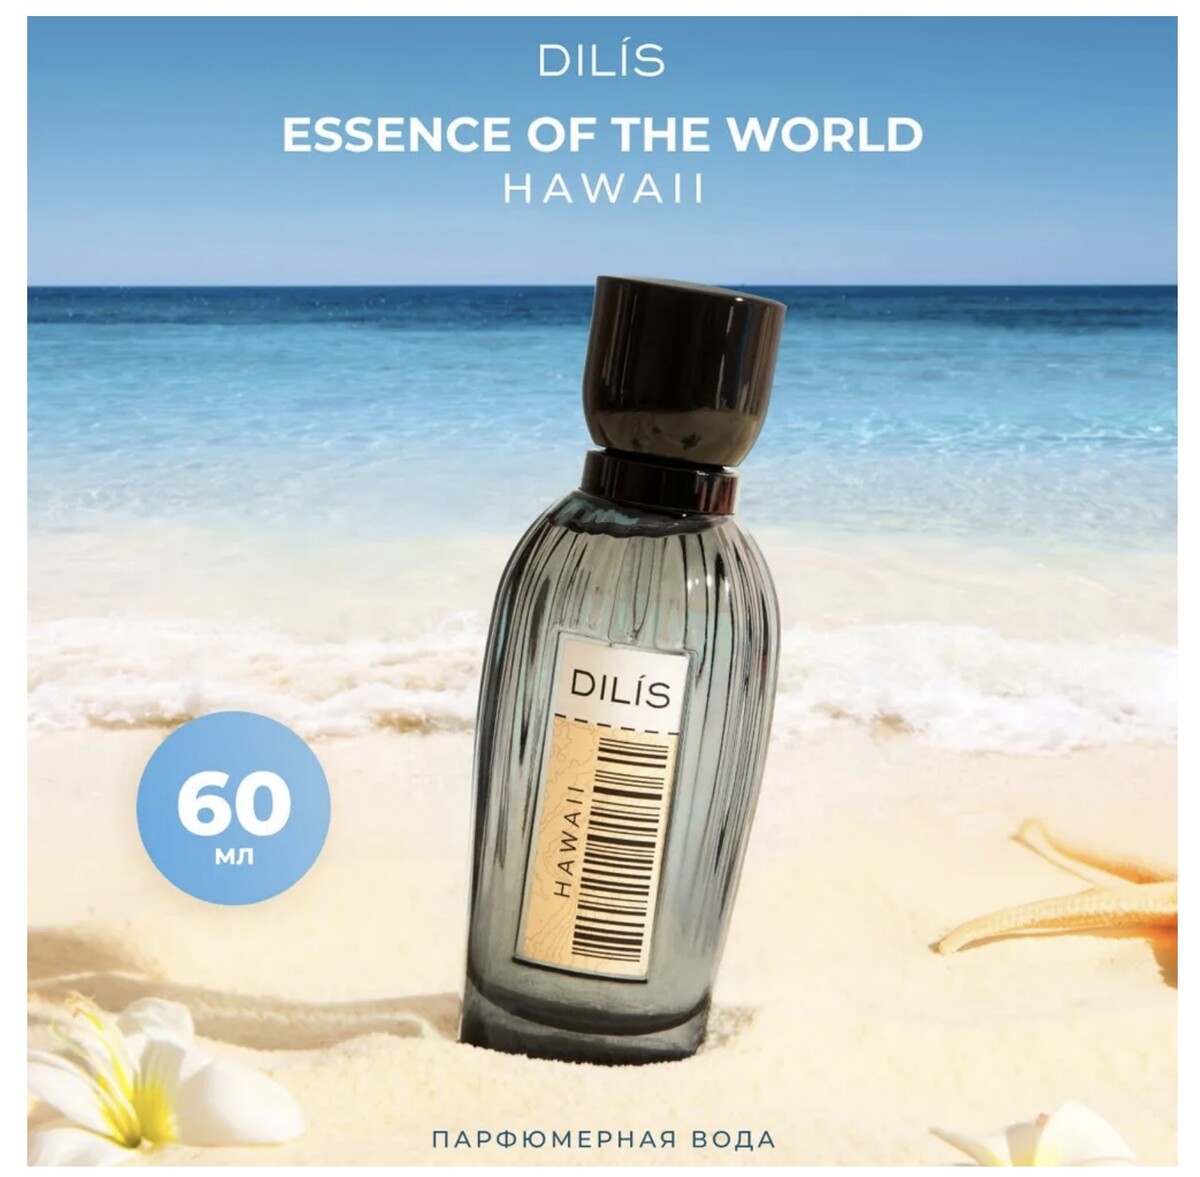 Essence of the world парфюмерная вода для женщин 60 мл essence of the world парфюмерная вода для женщин 60 мл